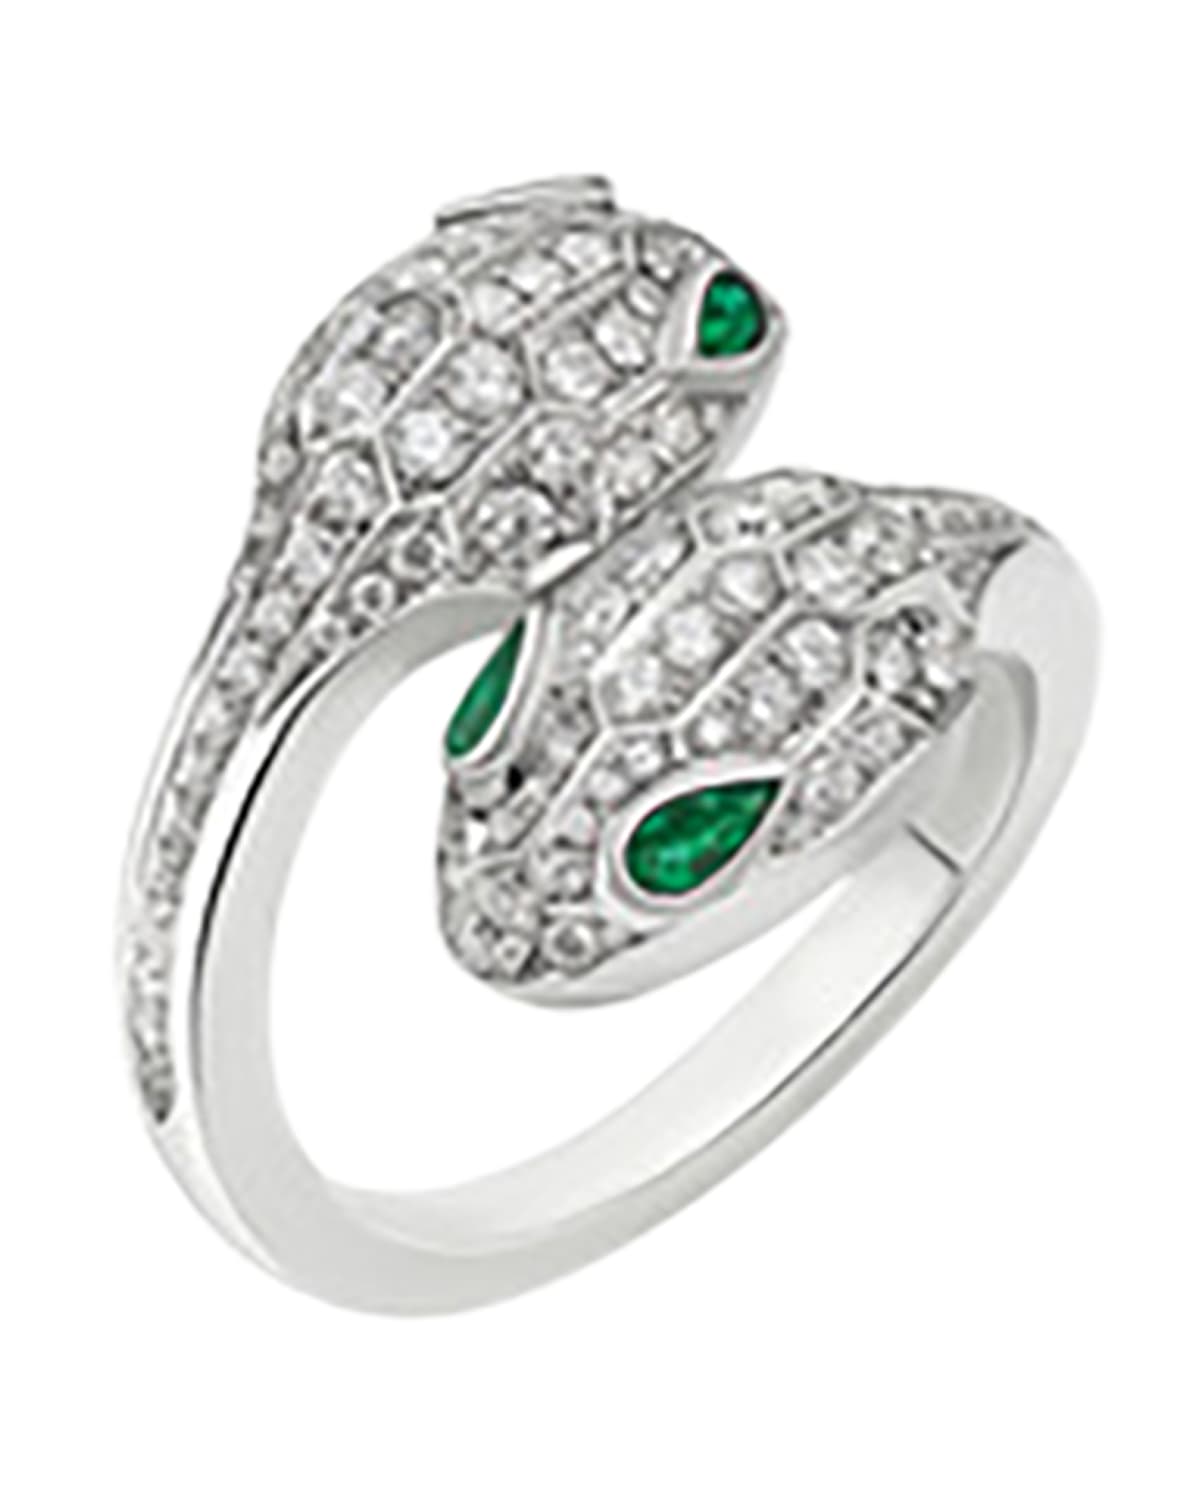 Serpenti Seduttori Ring with Emeralds and Diamonds, Size 52